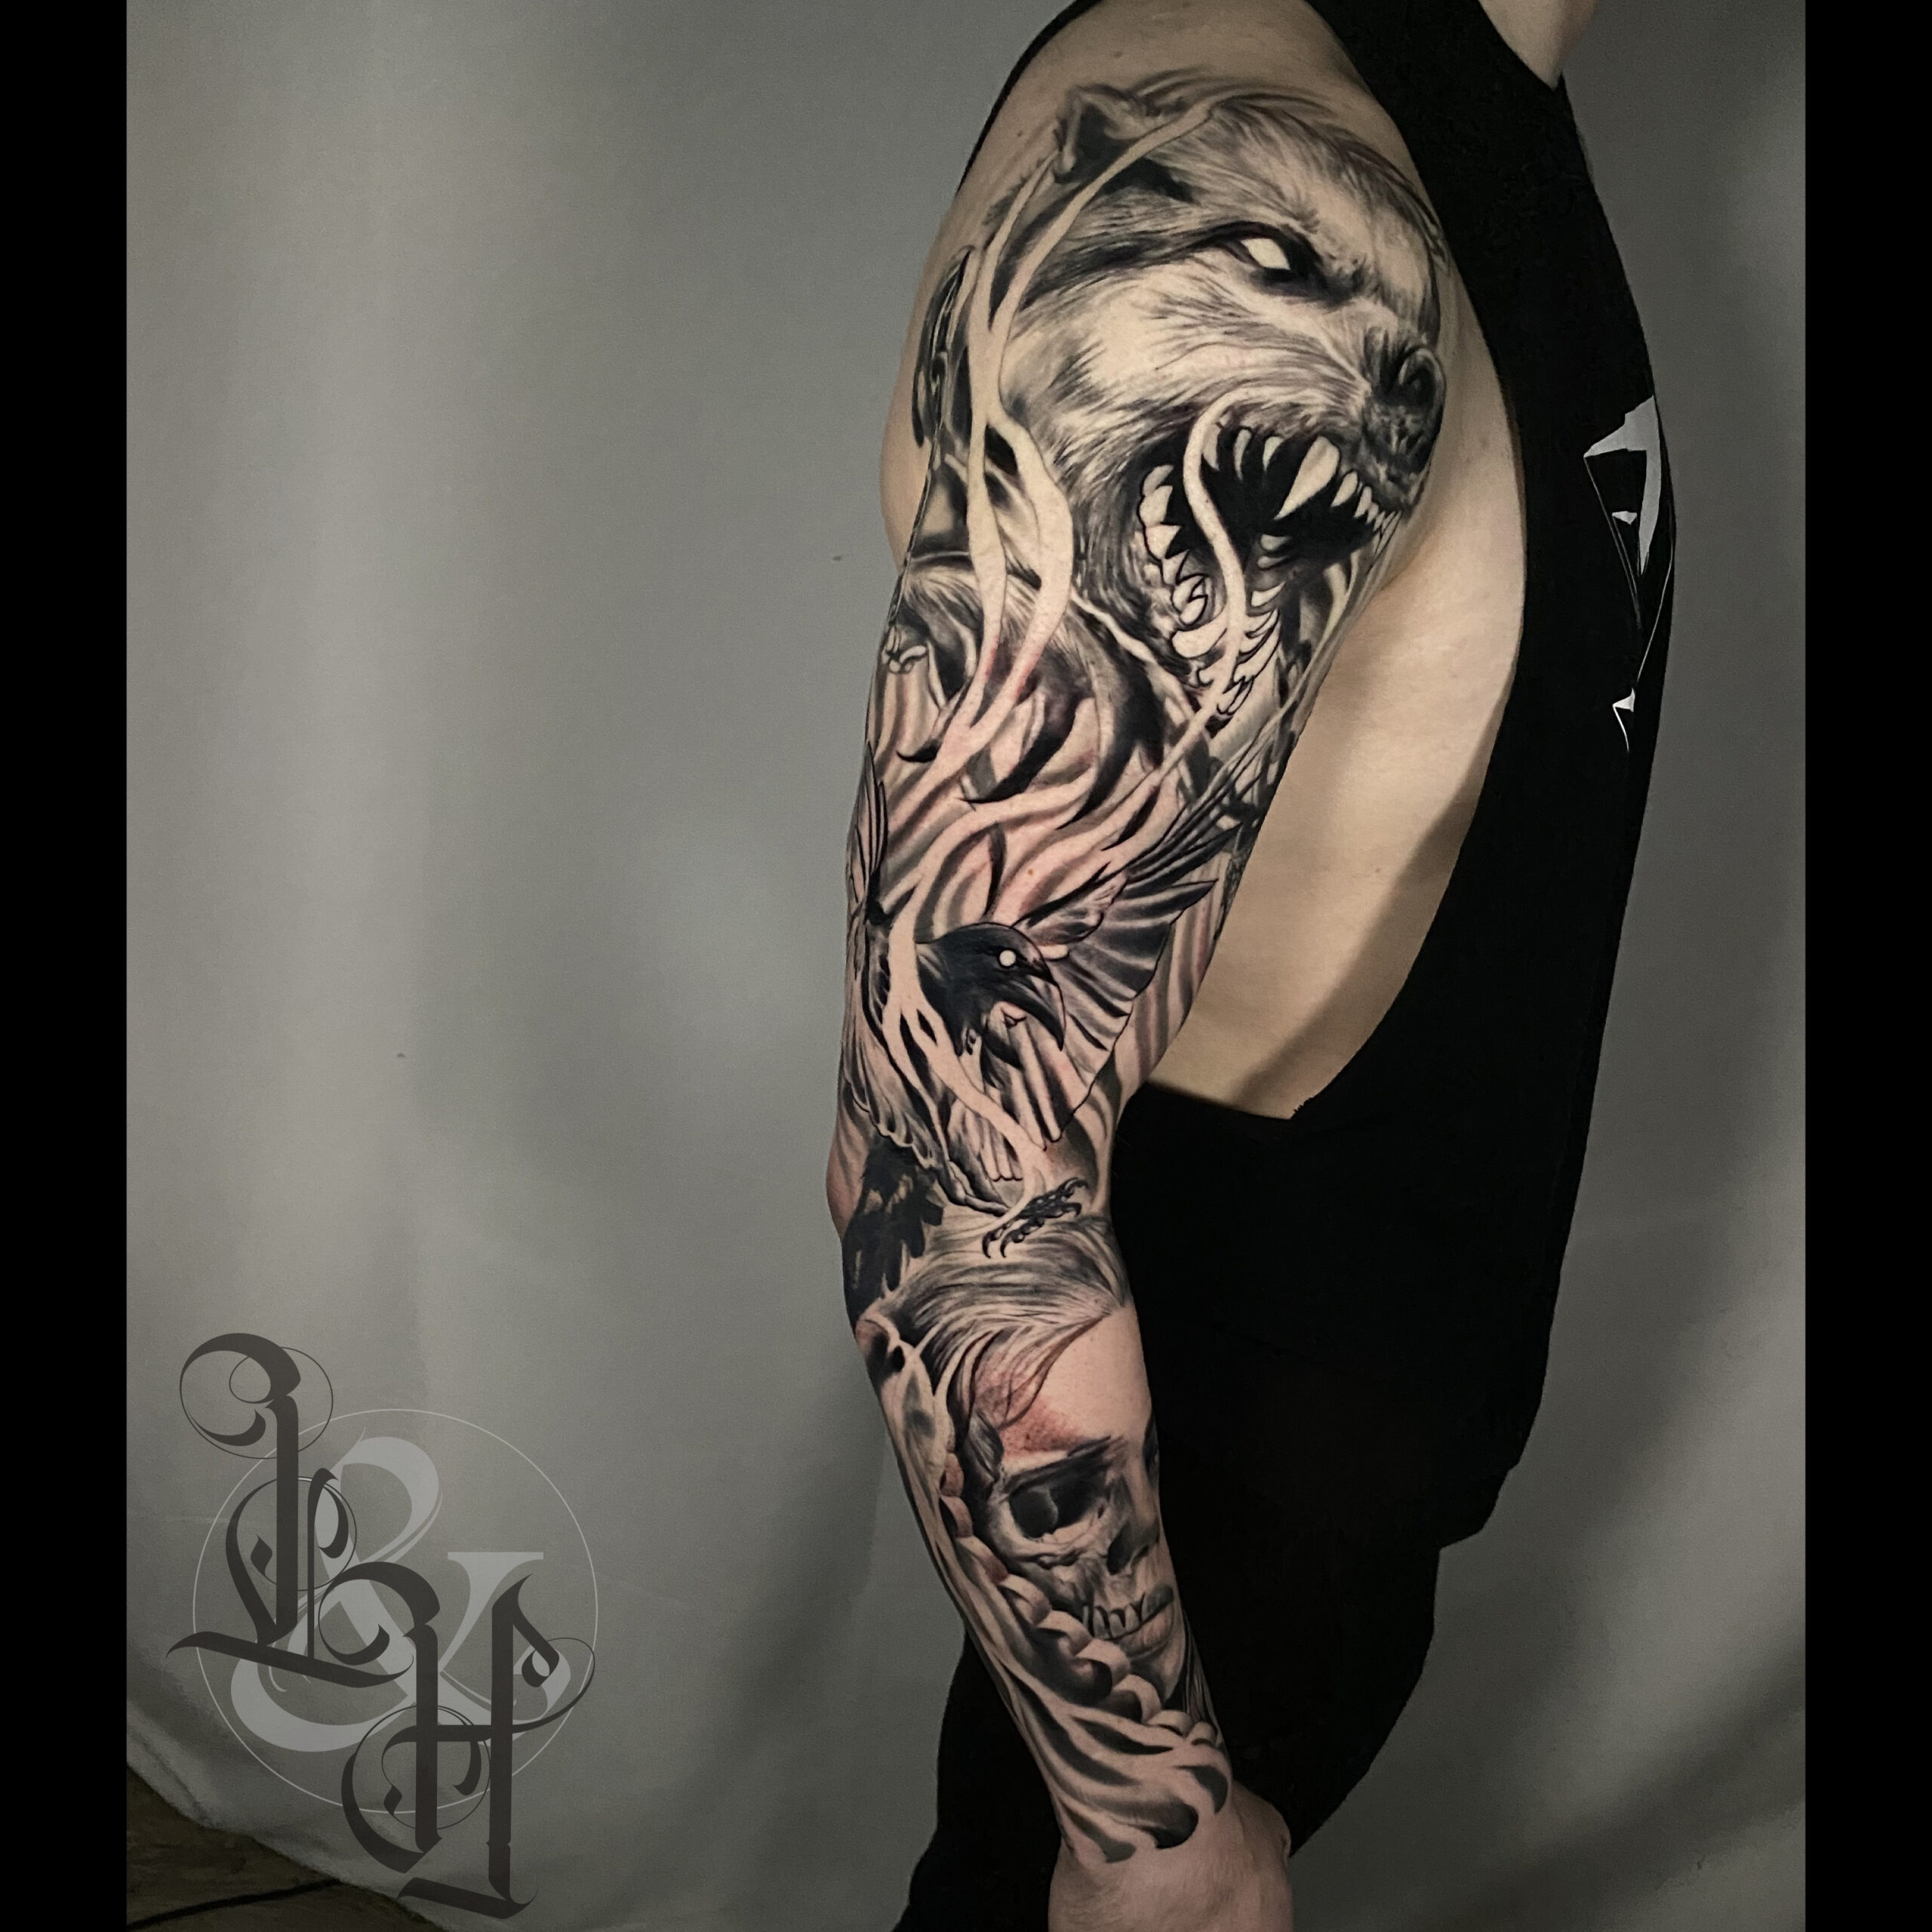 RAVEN and SKULL tattoo design by MWeissArt on DeviantArt